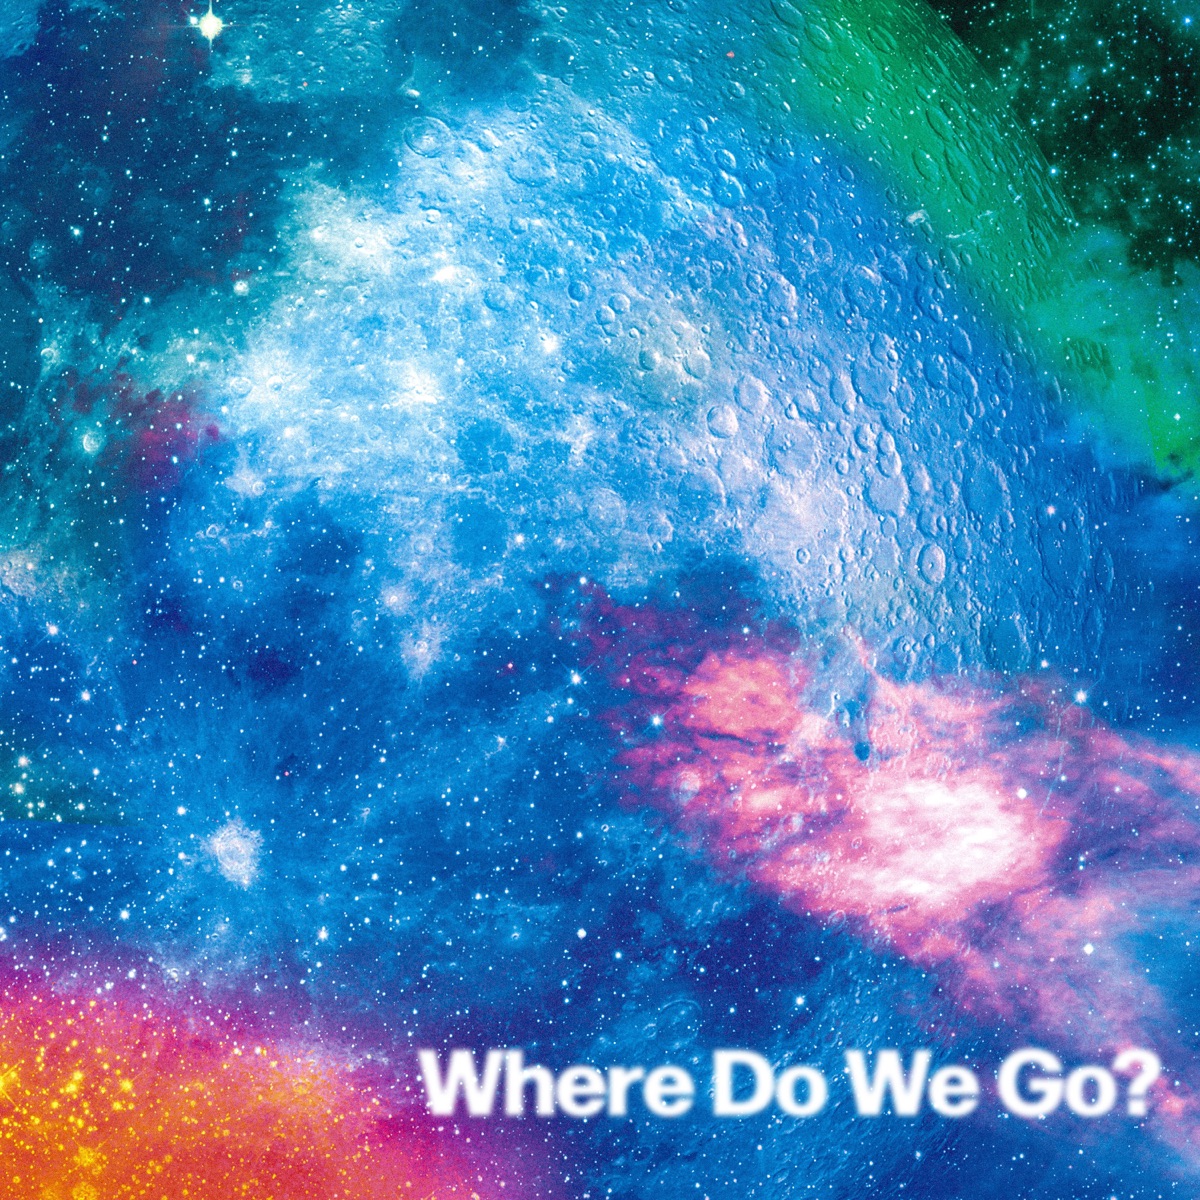 Cover art for『OKAMOTO'S - Where Do We Go?』from the release『Where Do We Go?』